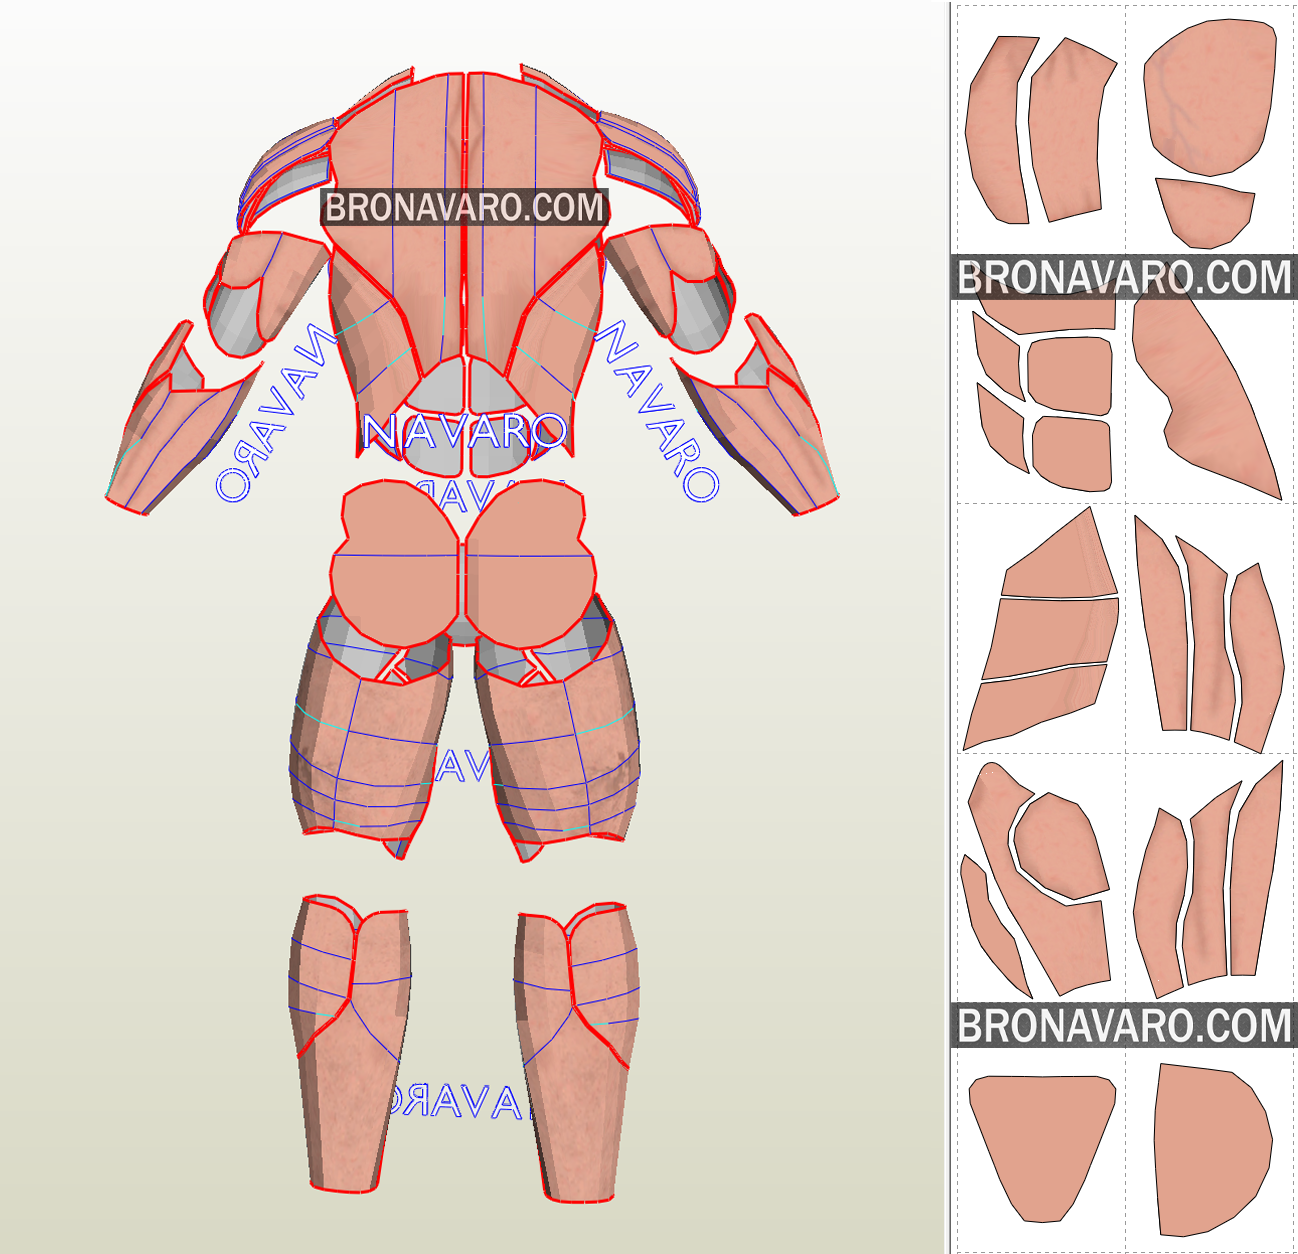 MUSCLE SUIT (Foam Template)  Muscle Suit Pepakura – NAVARO